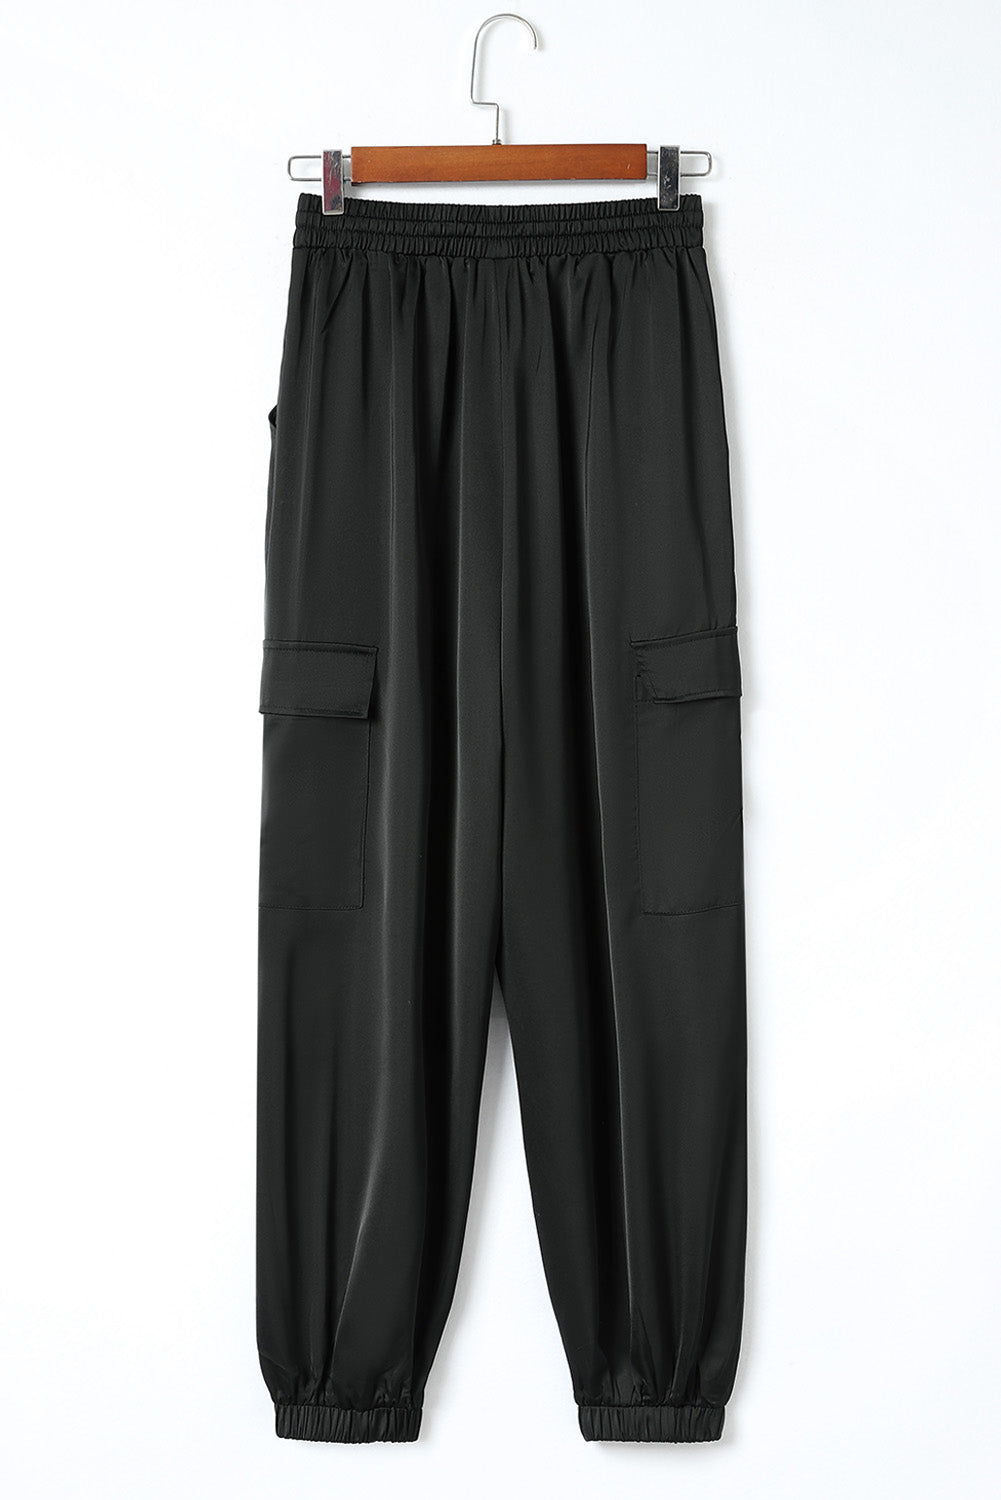 Black Satin Pocketed Drawstring Elastic Waist Pants-10